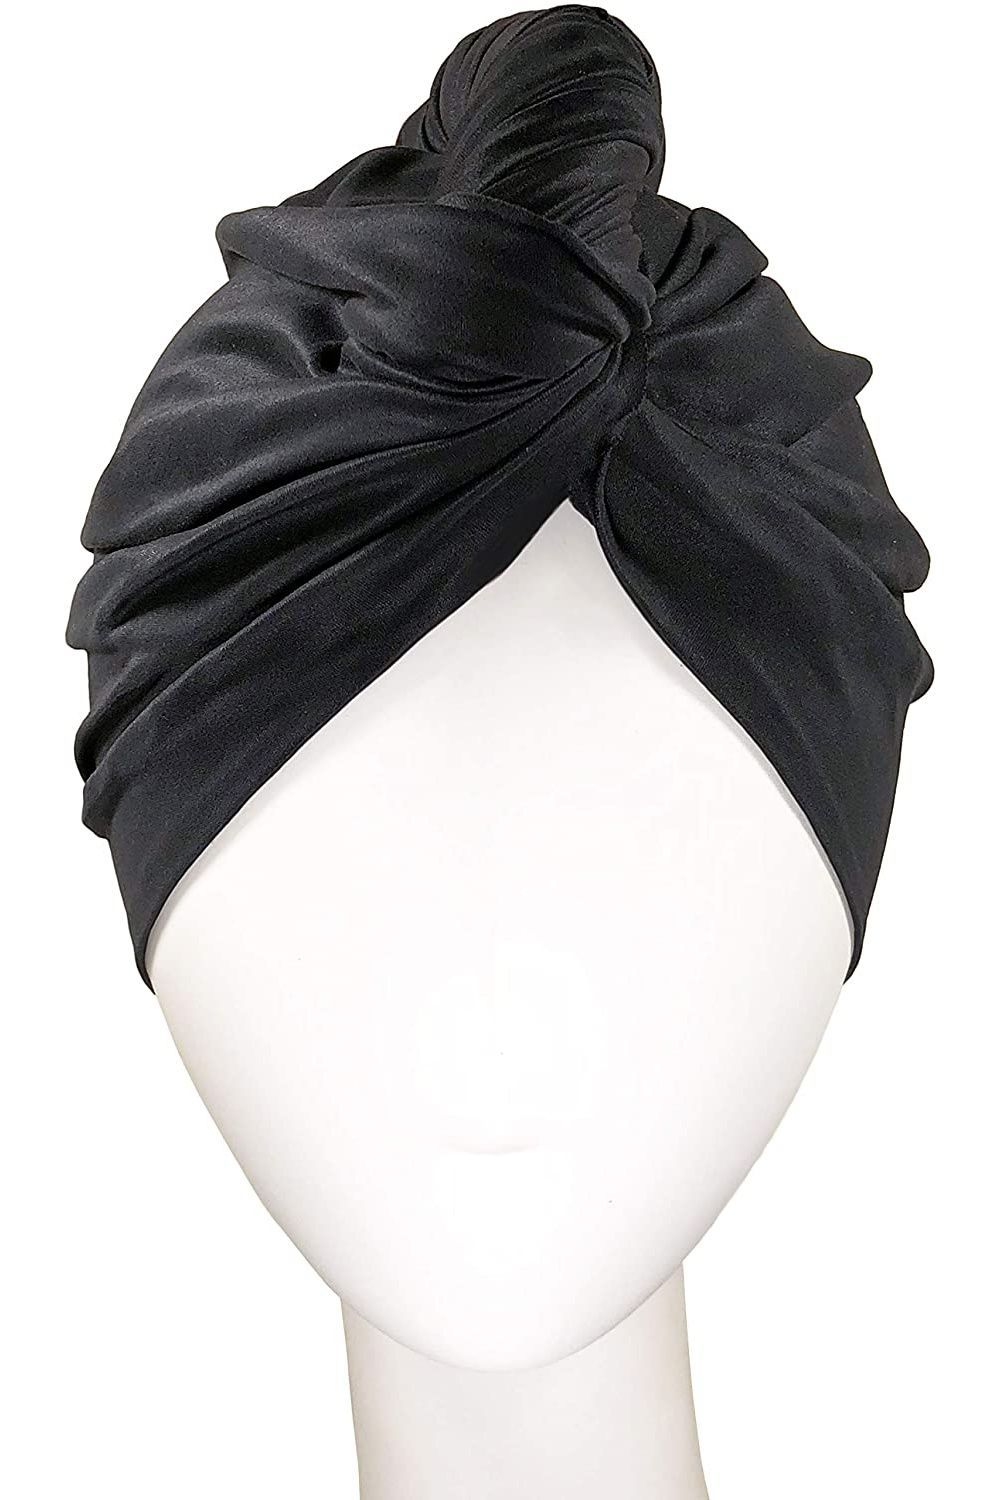 Details about   Women Hair Quick Drying Microfiber Turban Towel Knot Twist Loop Wrap Hat Cap 